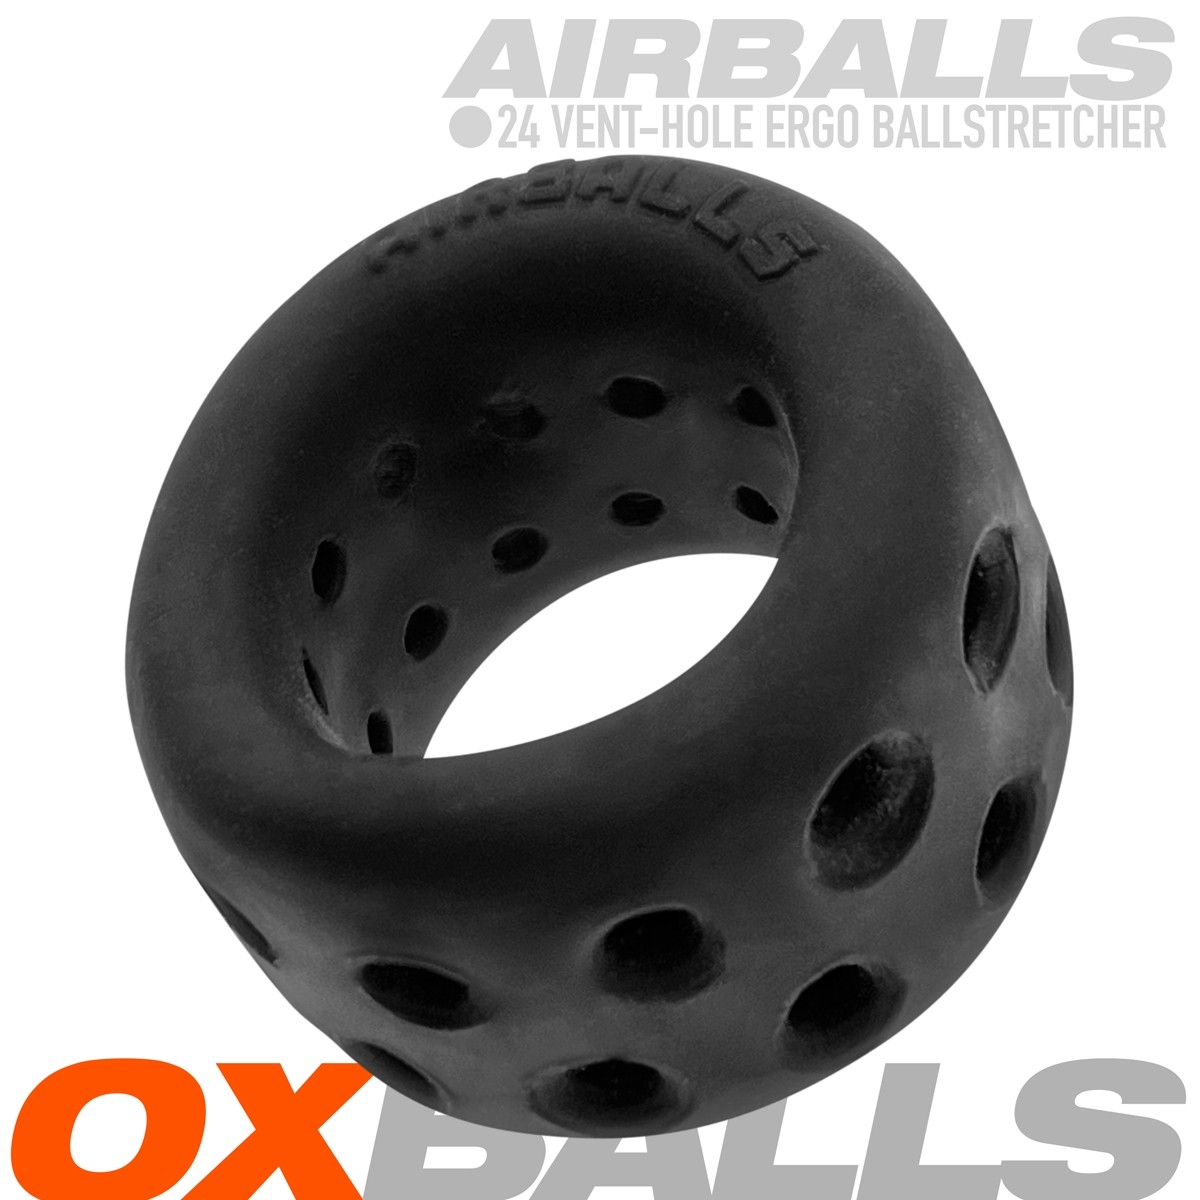 Oxballs Airballs Air-Lite Vented Ballstretcher - XOXTOYS